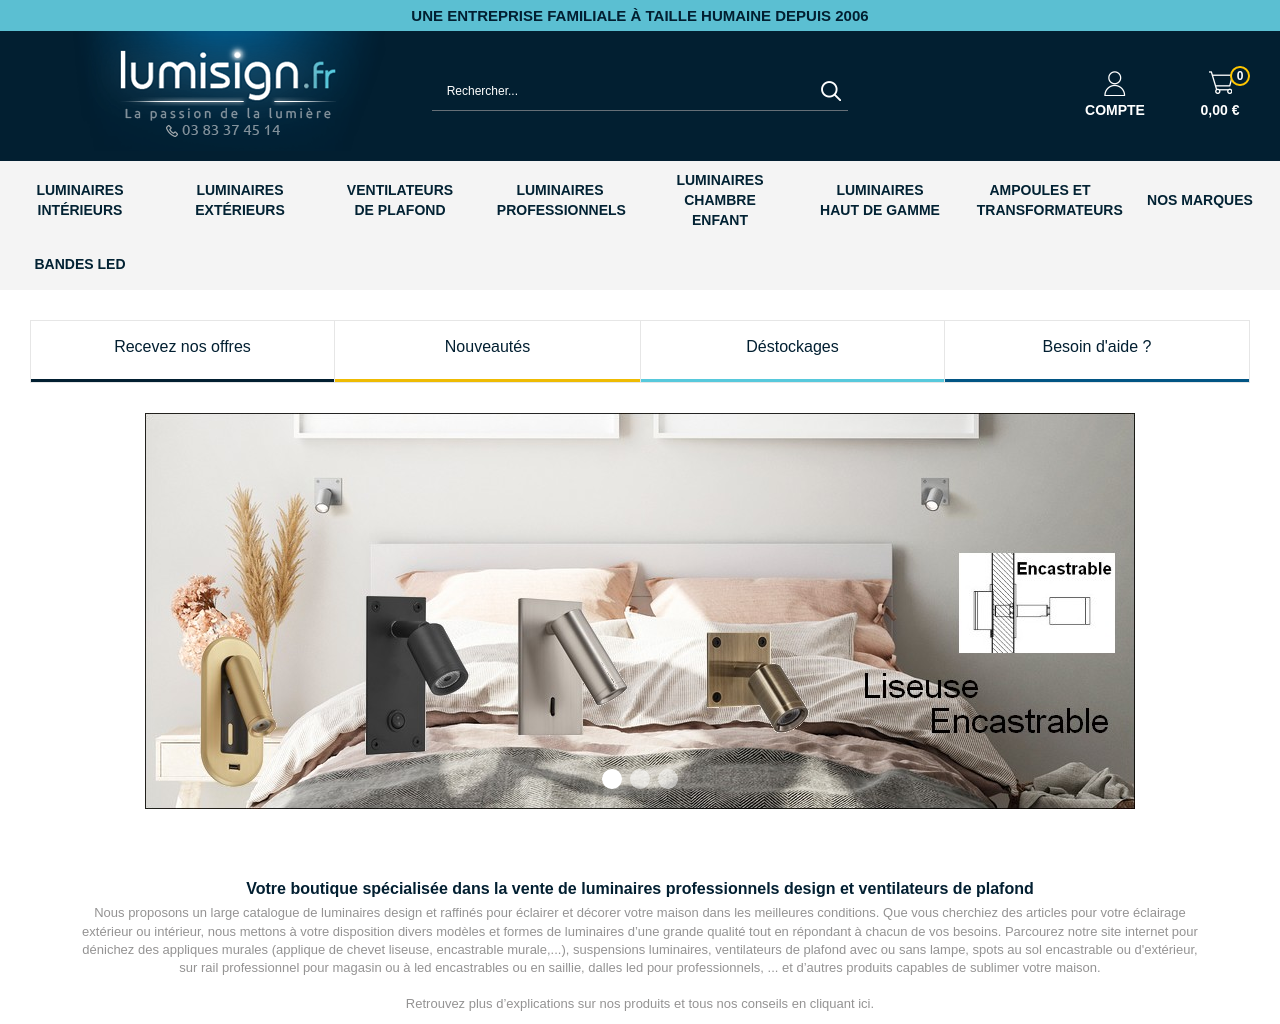 www.lumisign.fr